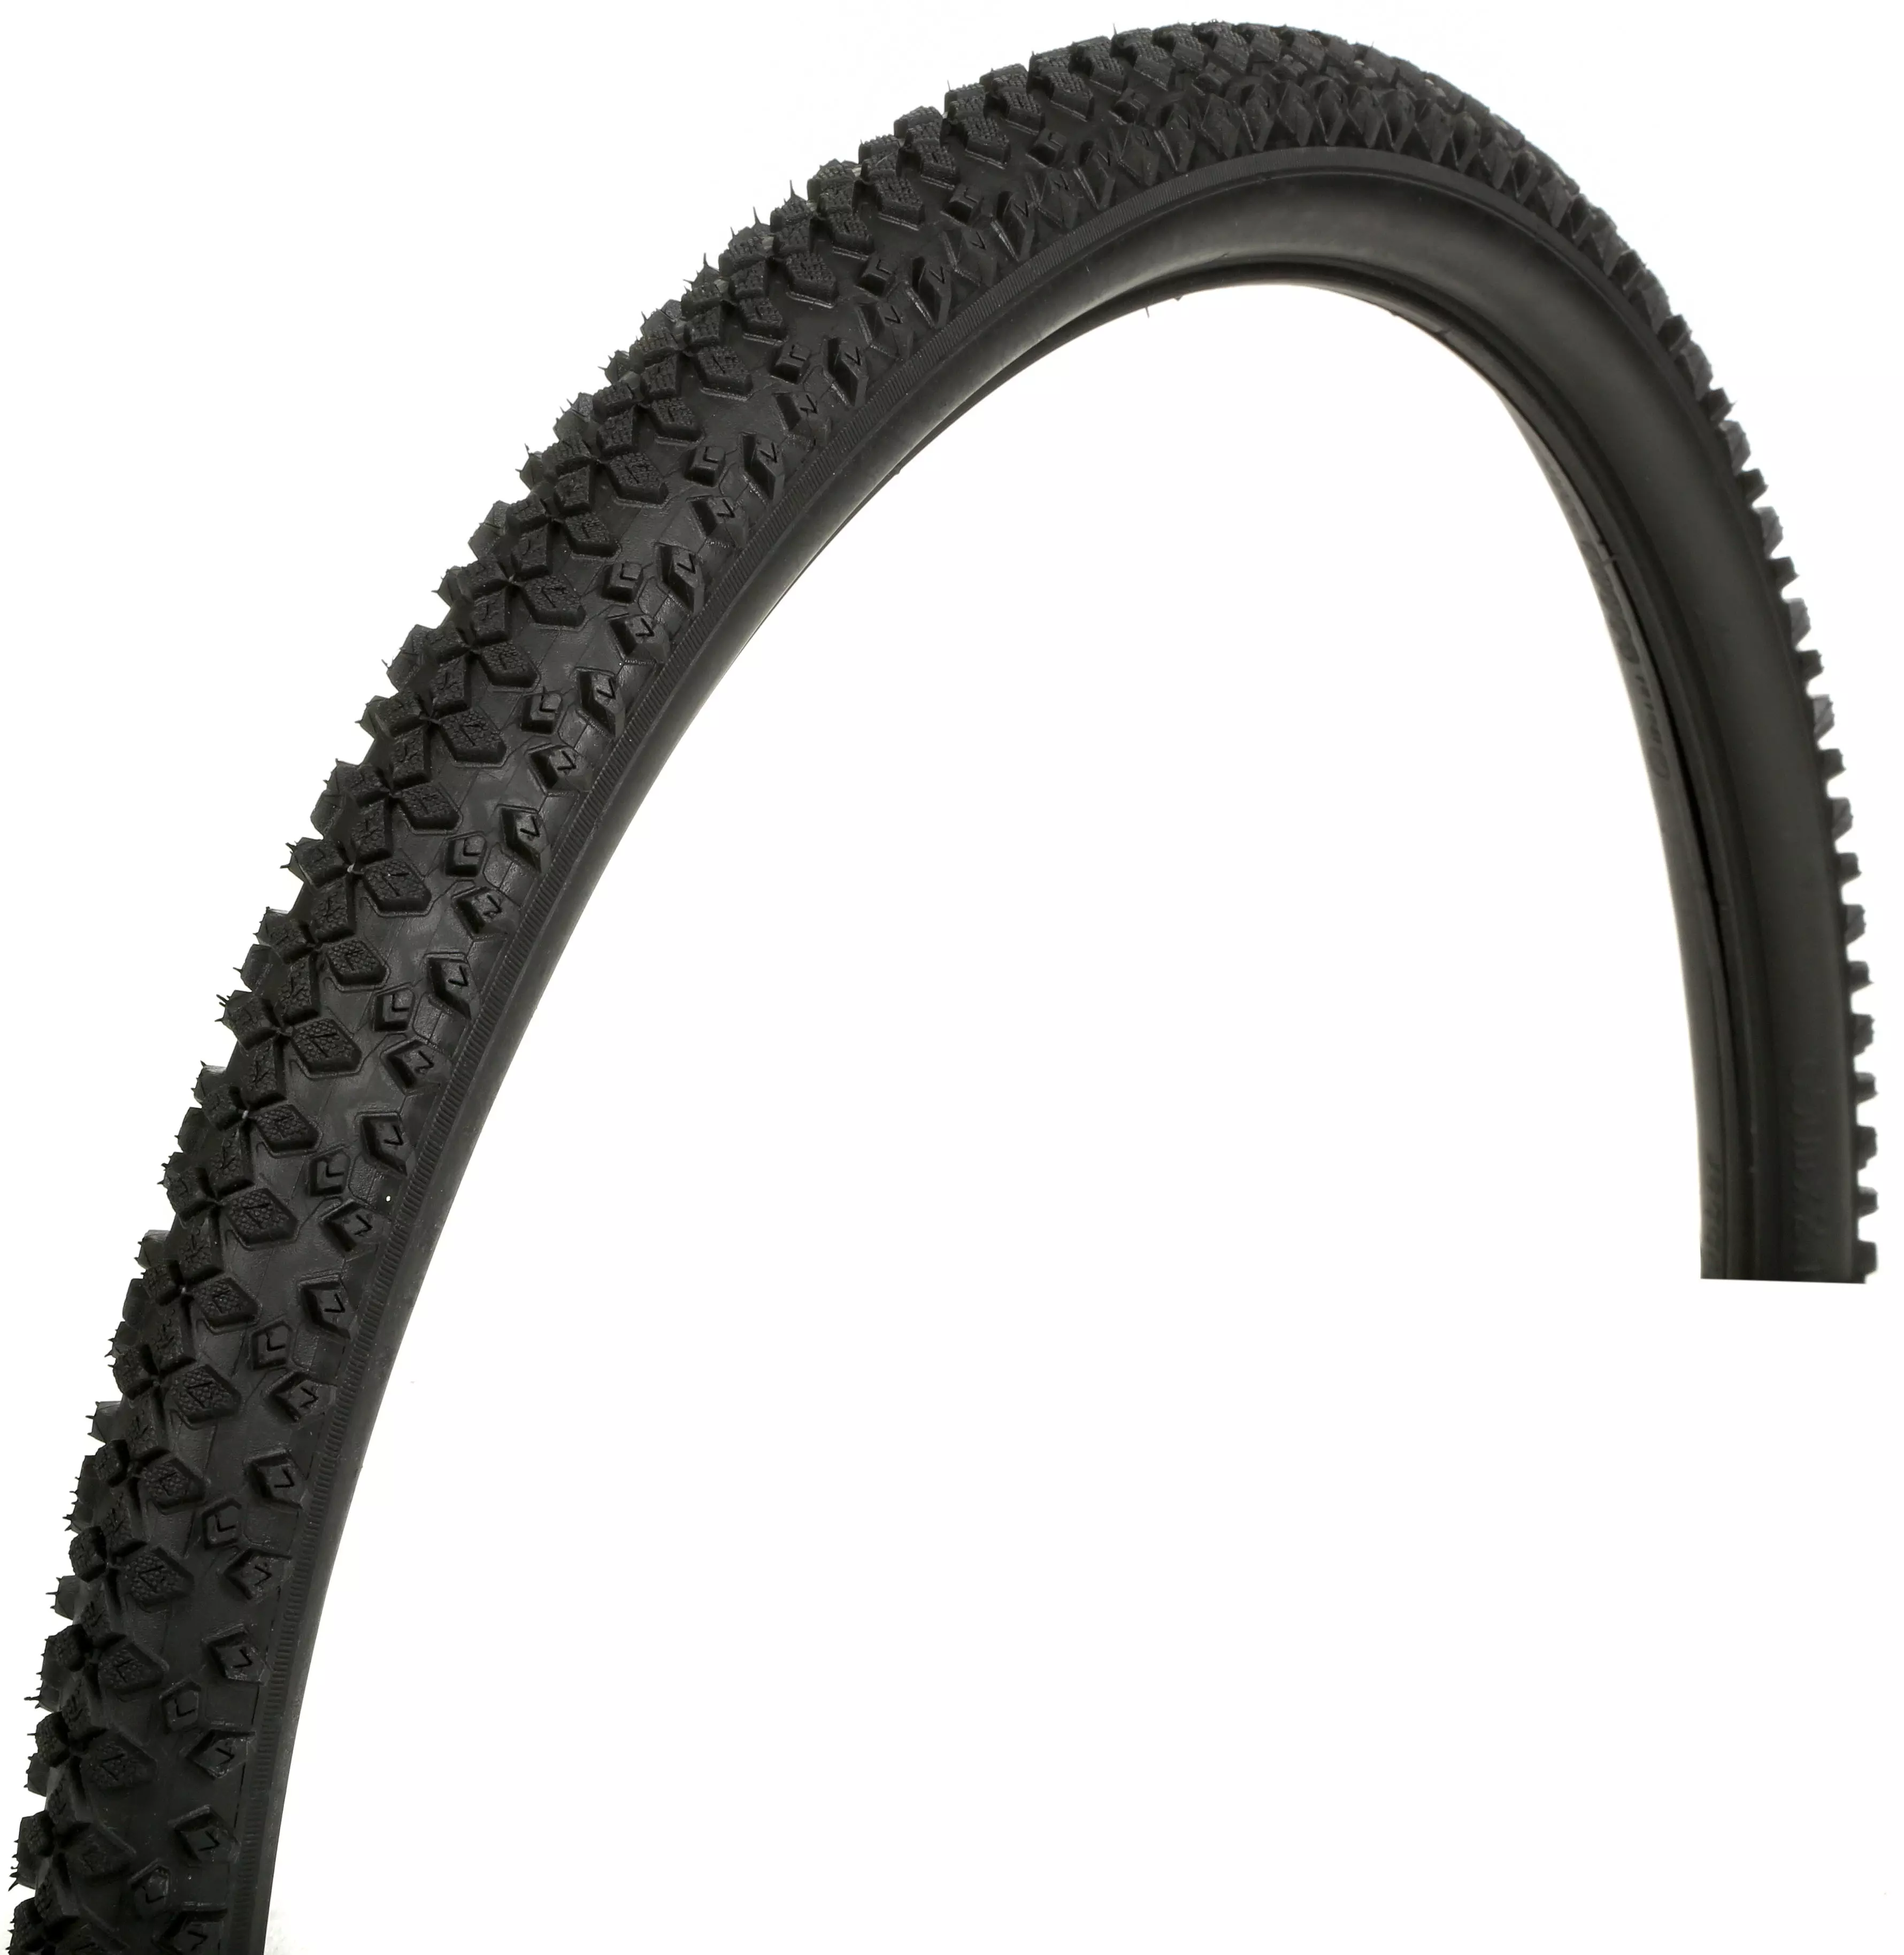 Bikehut MTB Tyre 27.5 x 2.1 with 